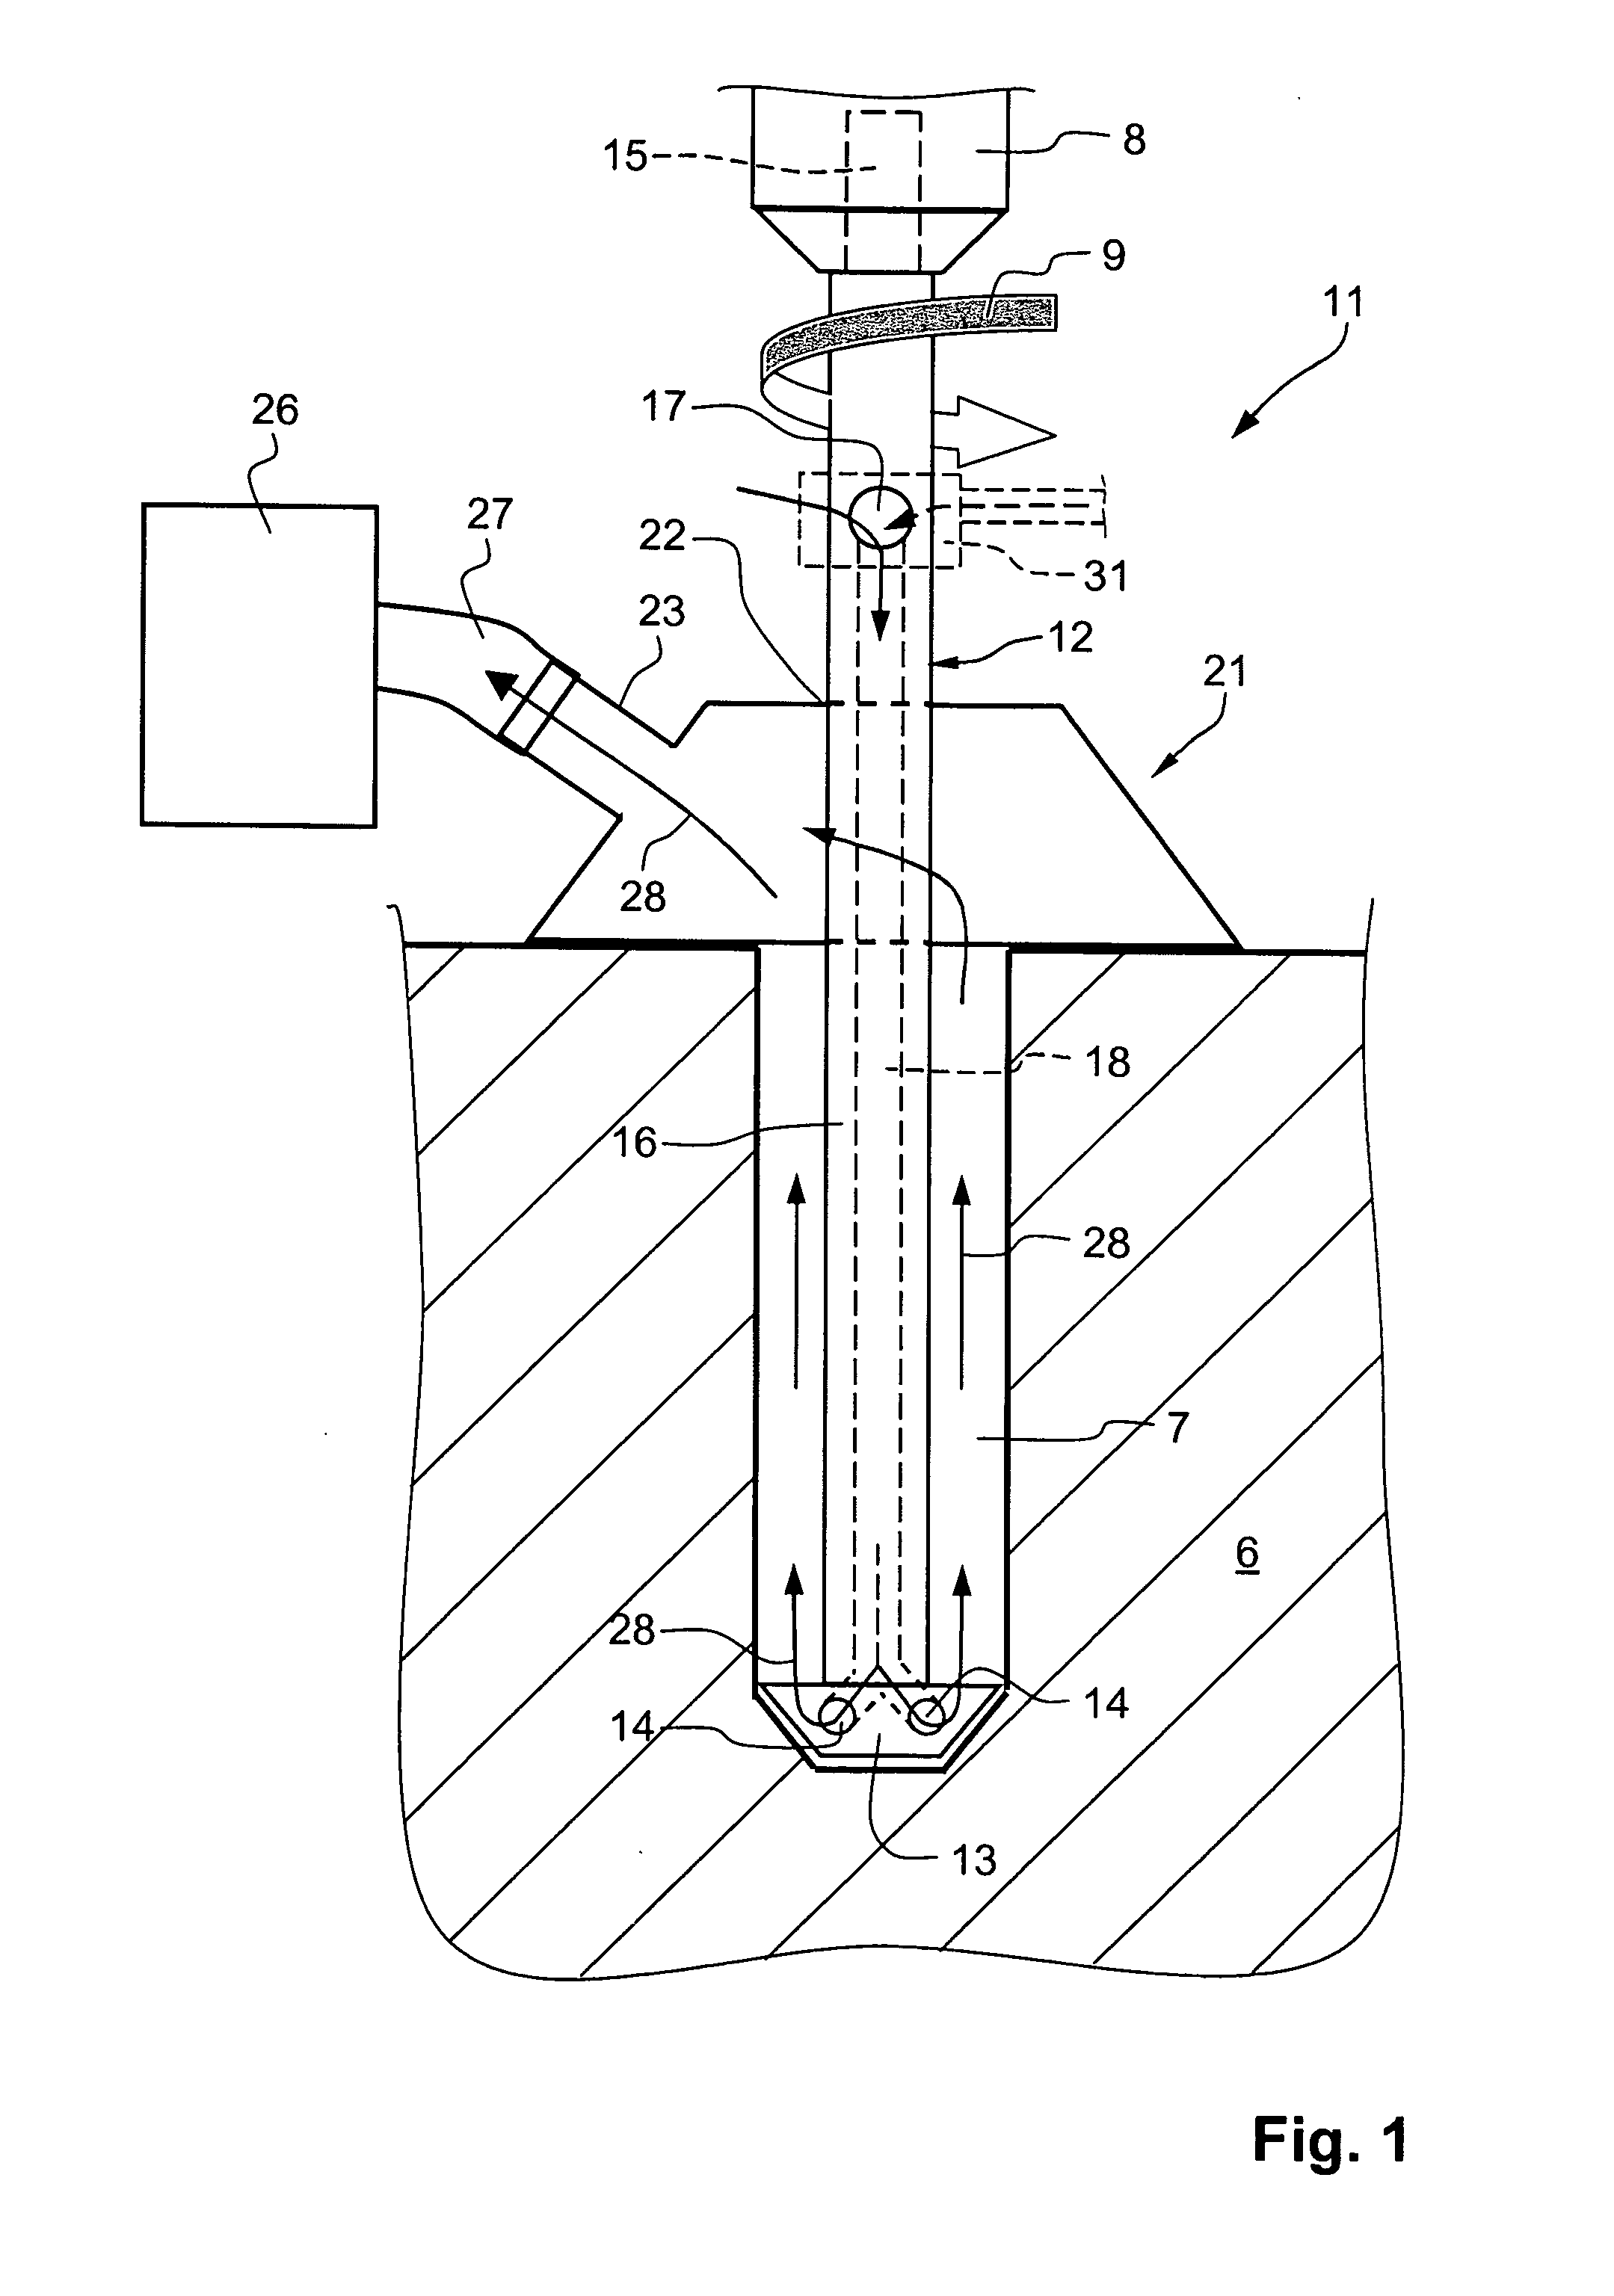 Method of anchoring fastening element